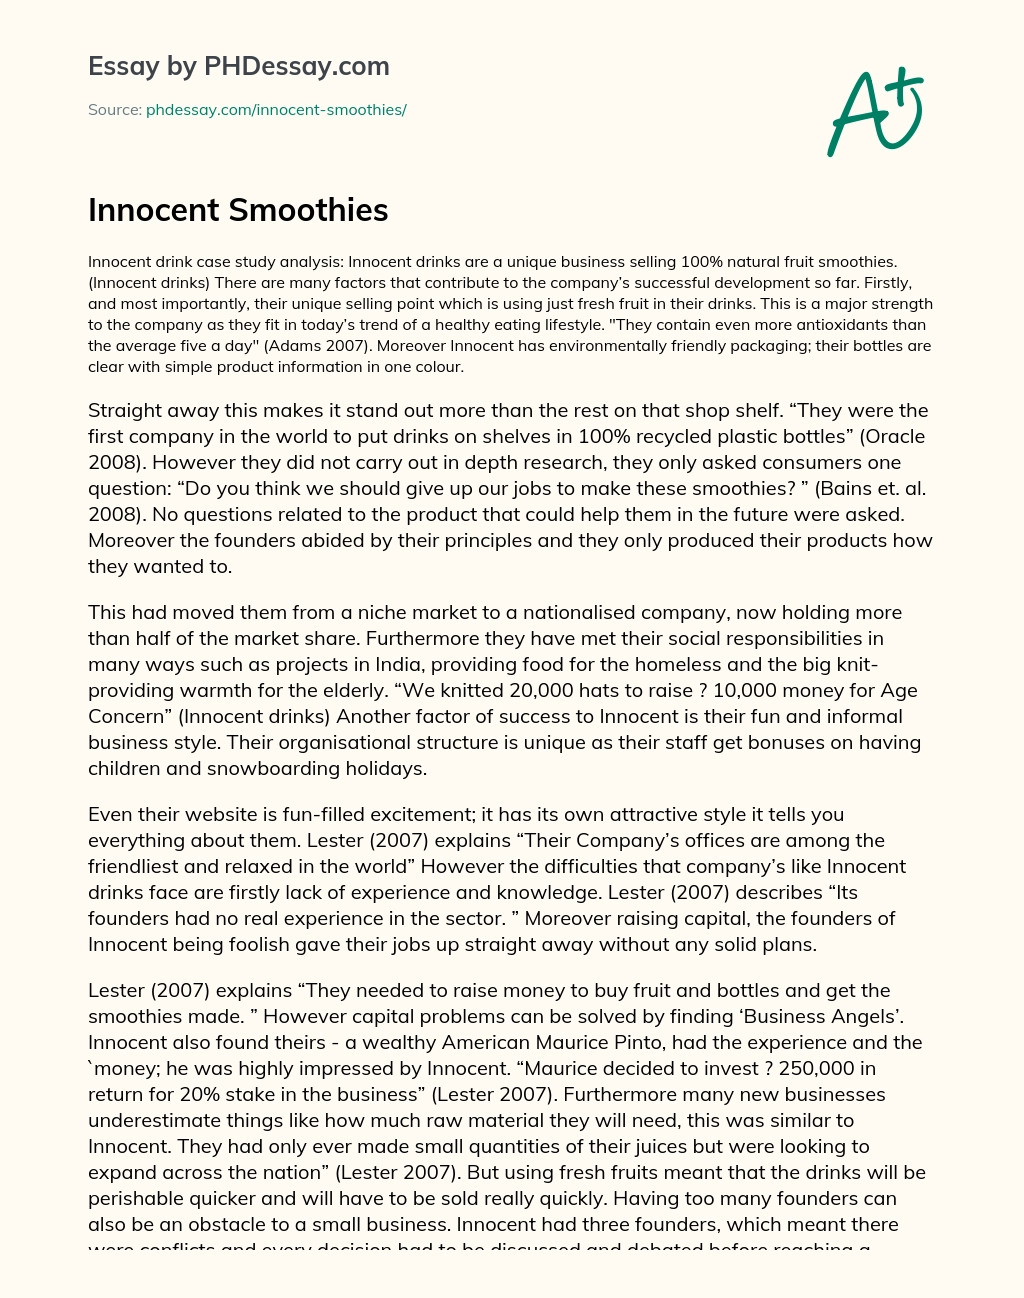 Innocent Smoothies essay